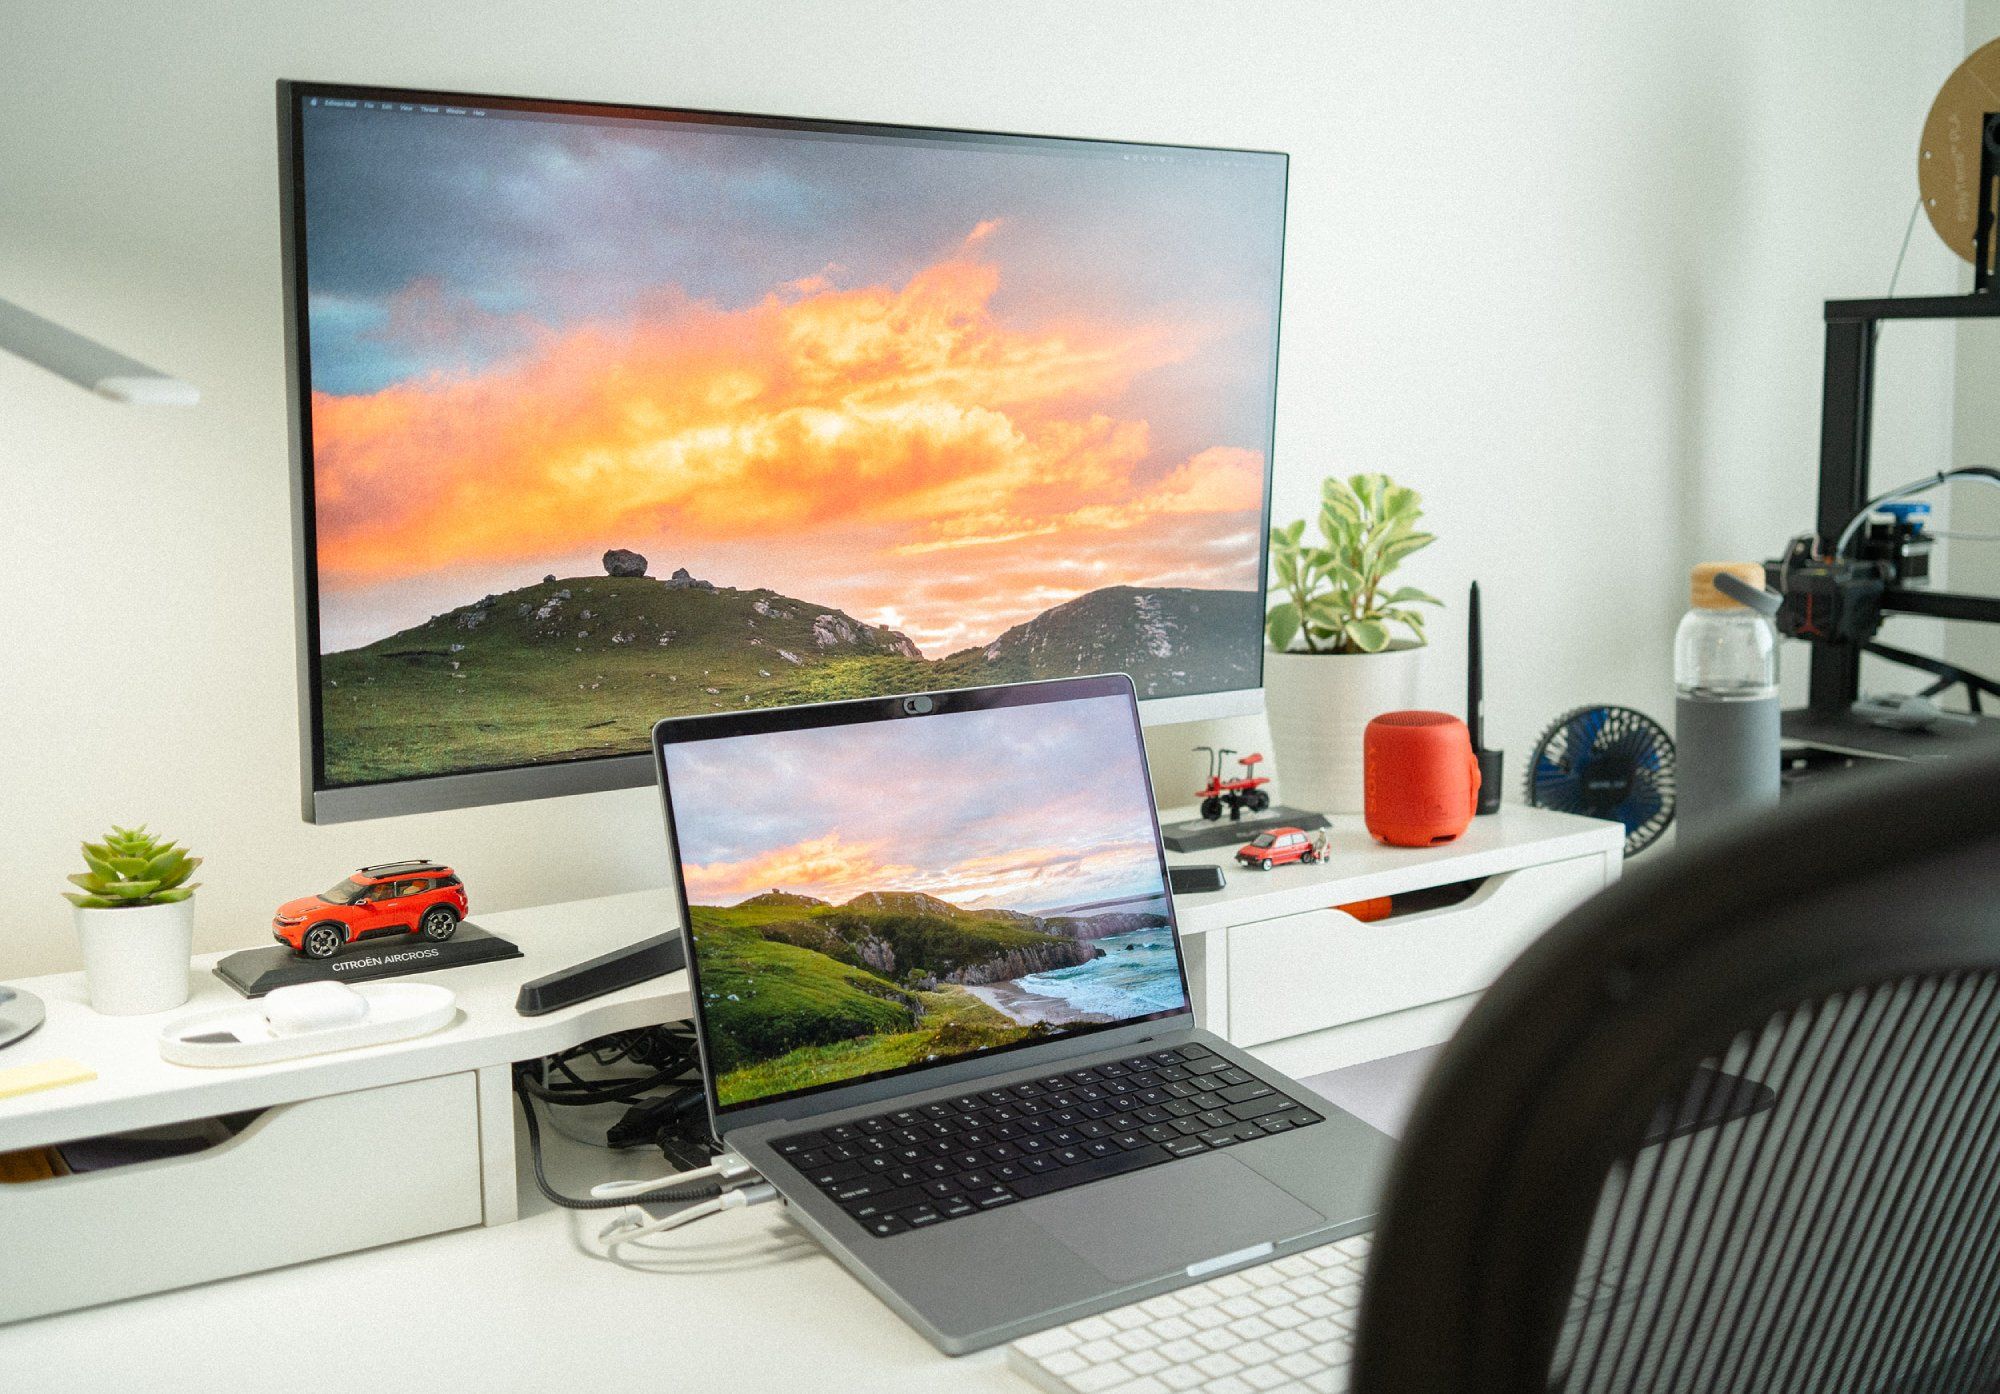 A creative designer’s home office desk setup